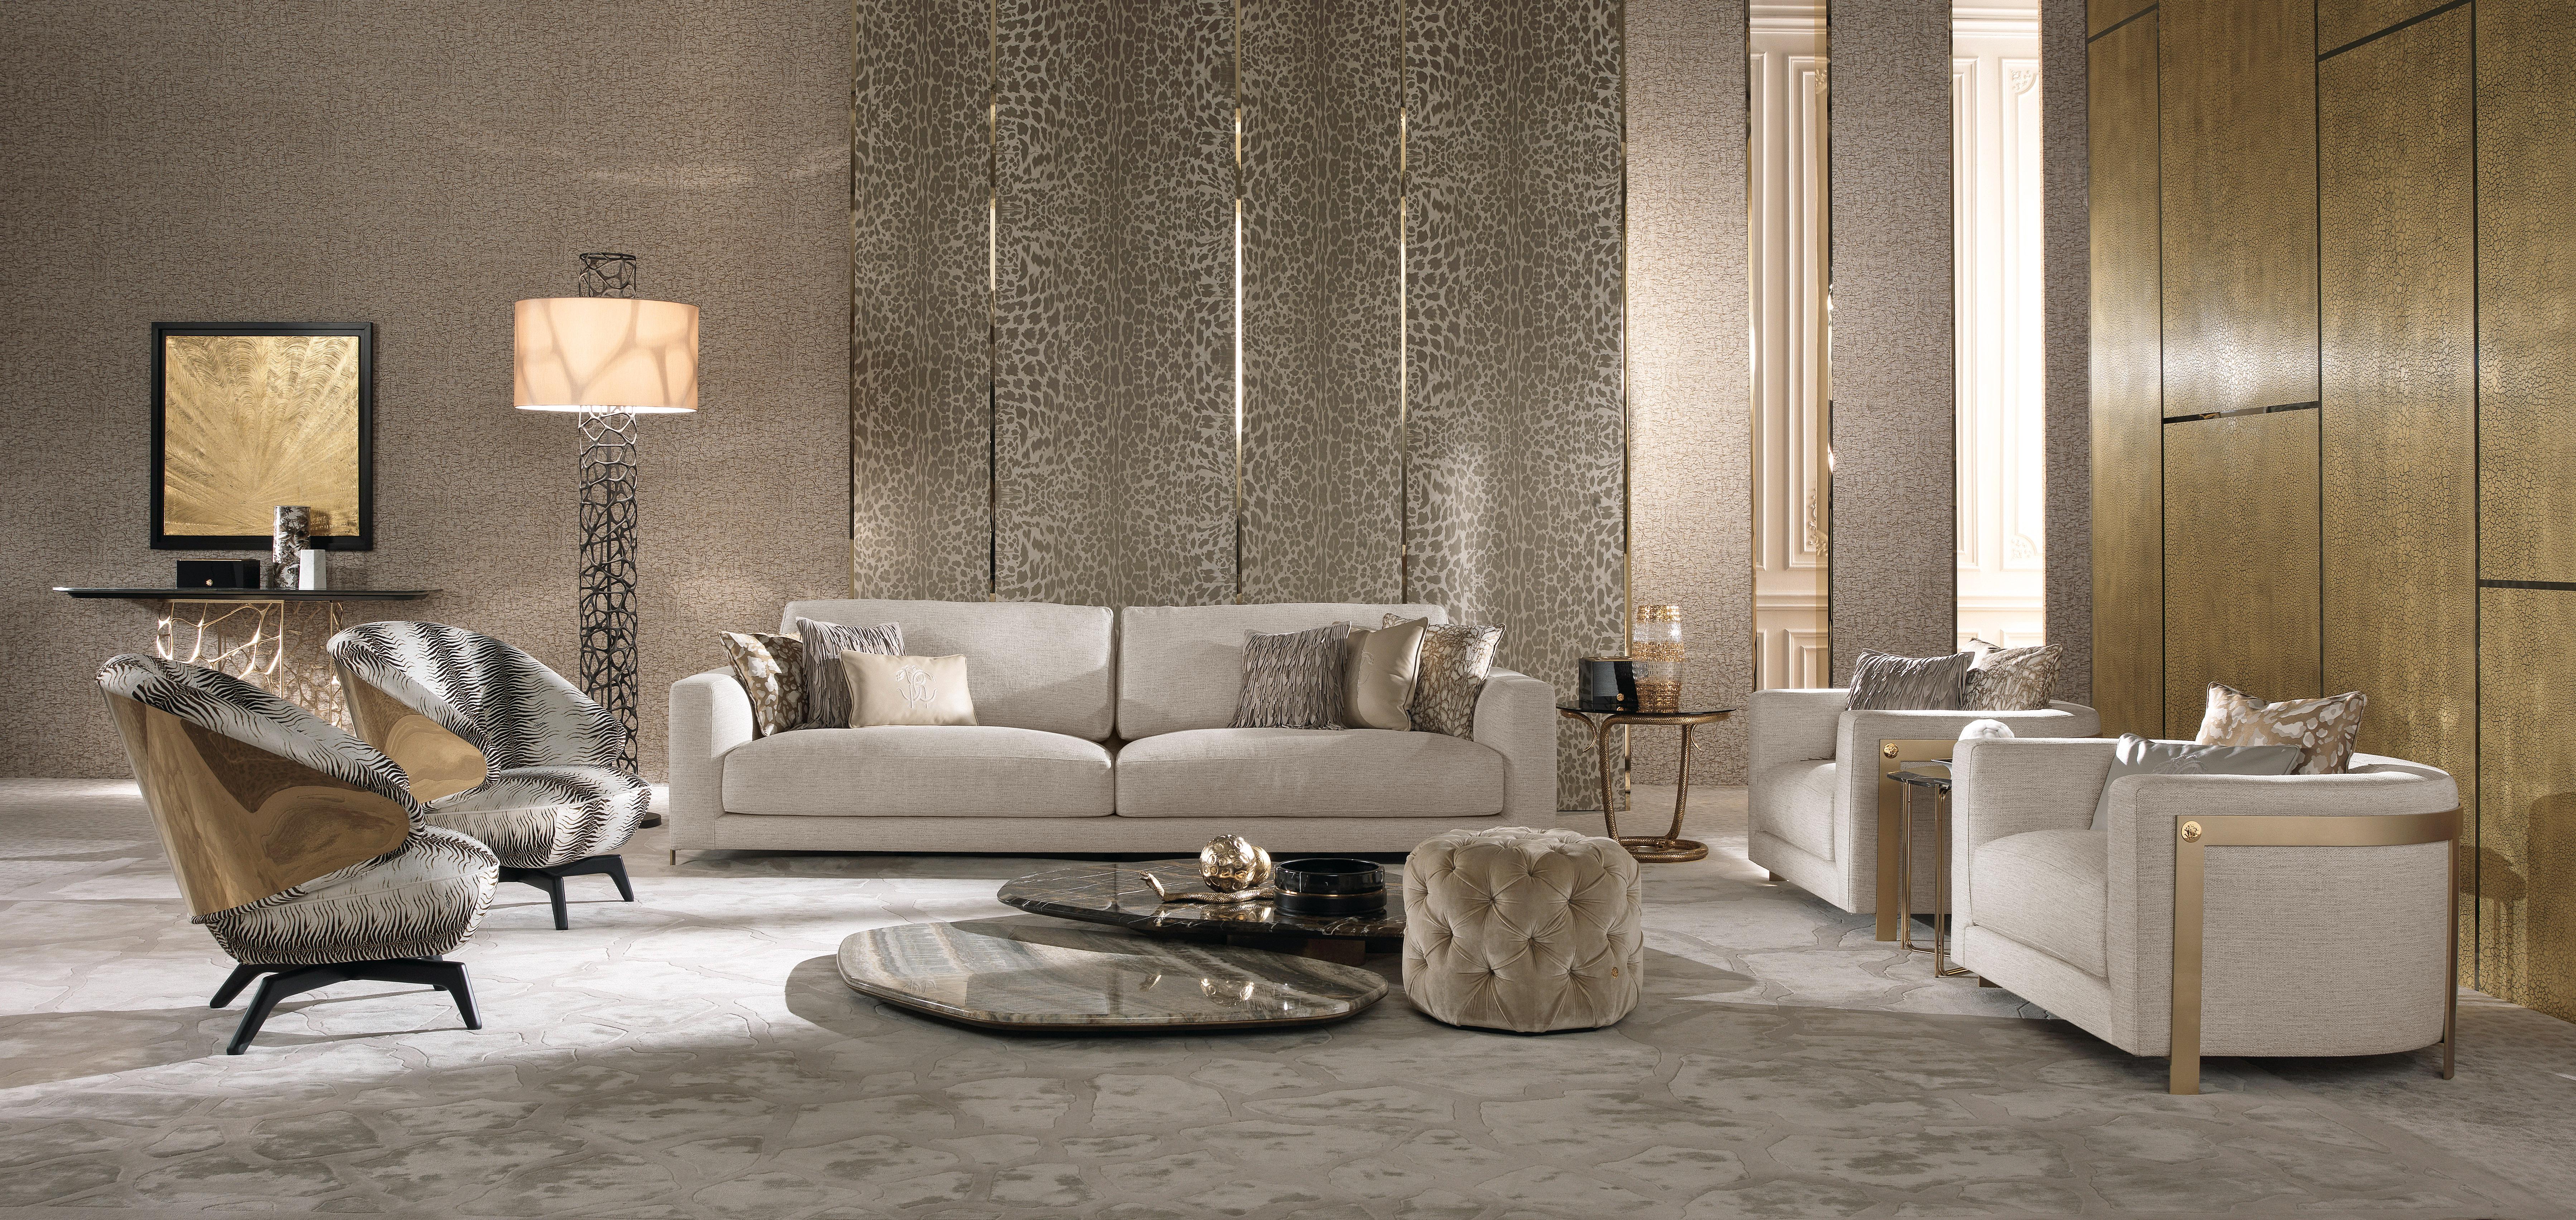 Foam 21st Century Manhattan Sofa in Fabric by Roberto Cavalli Home Interiors For Sale